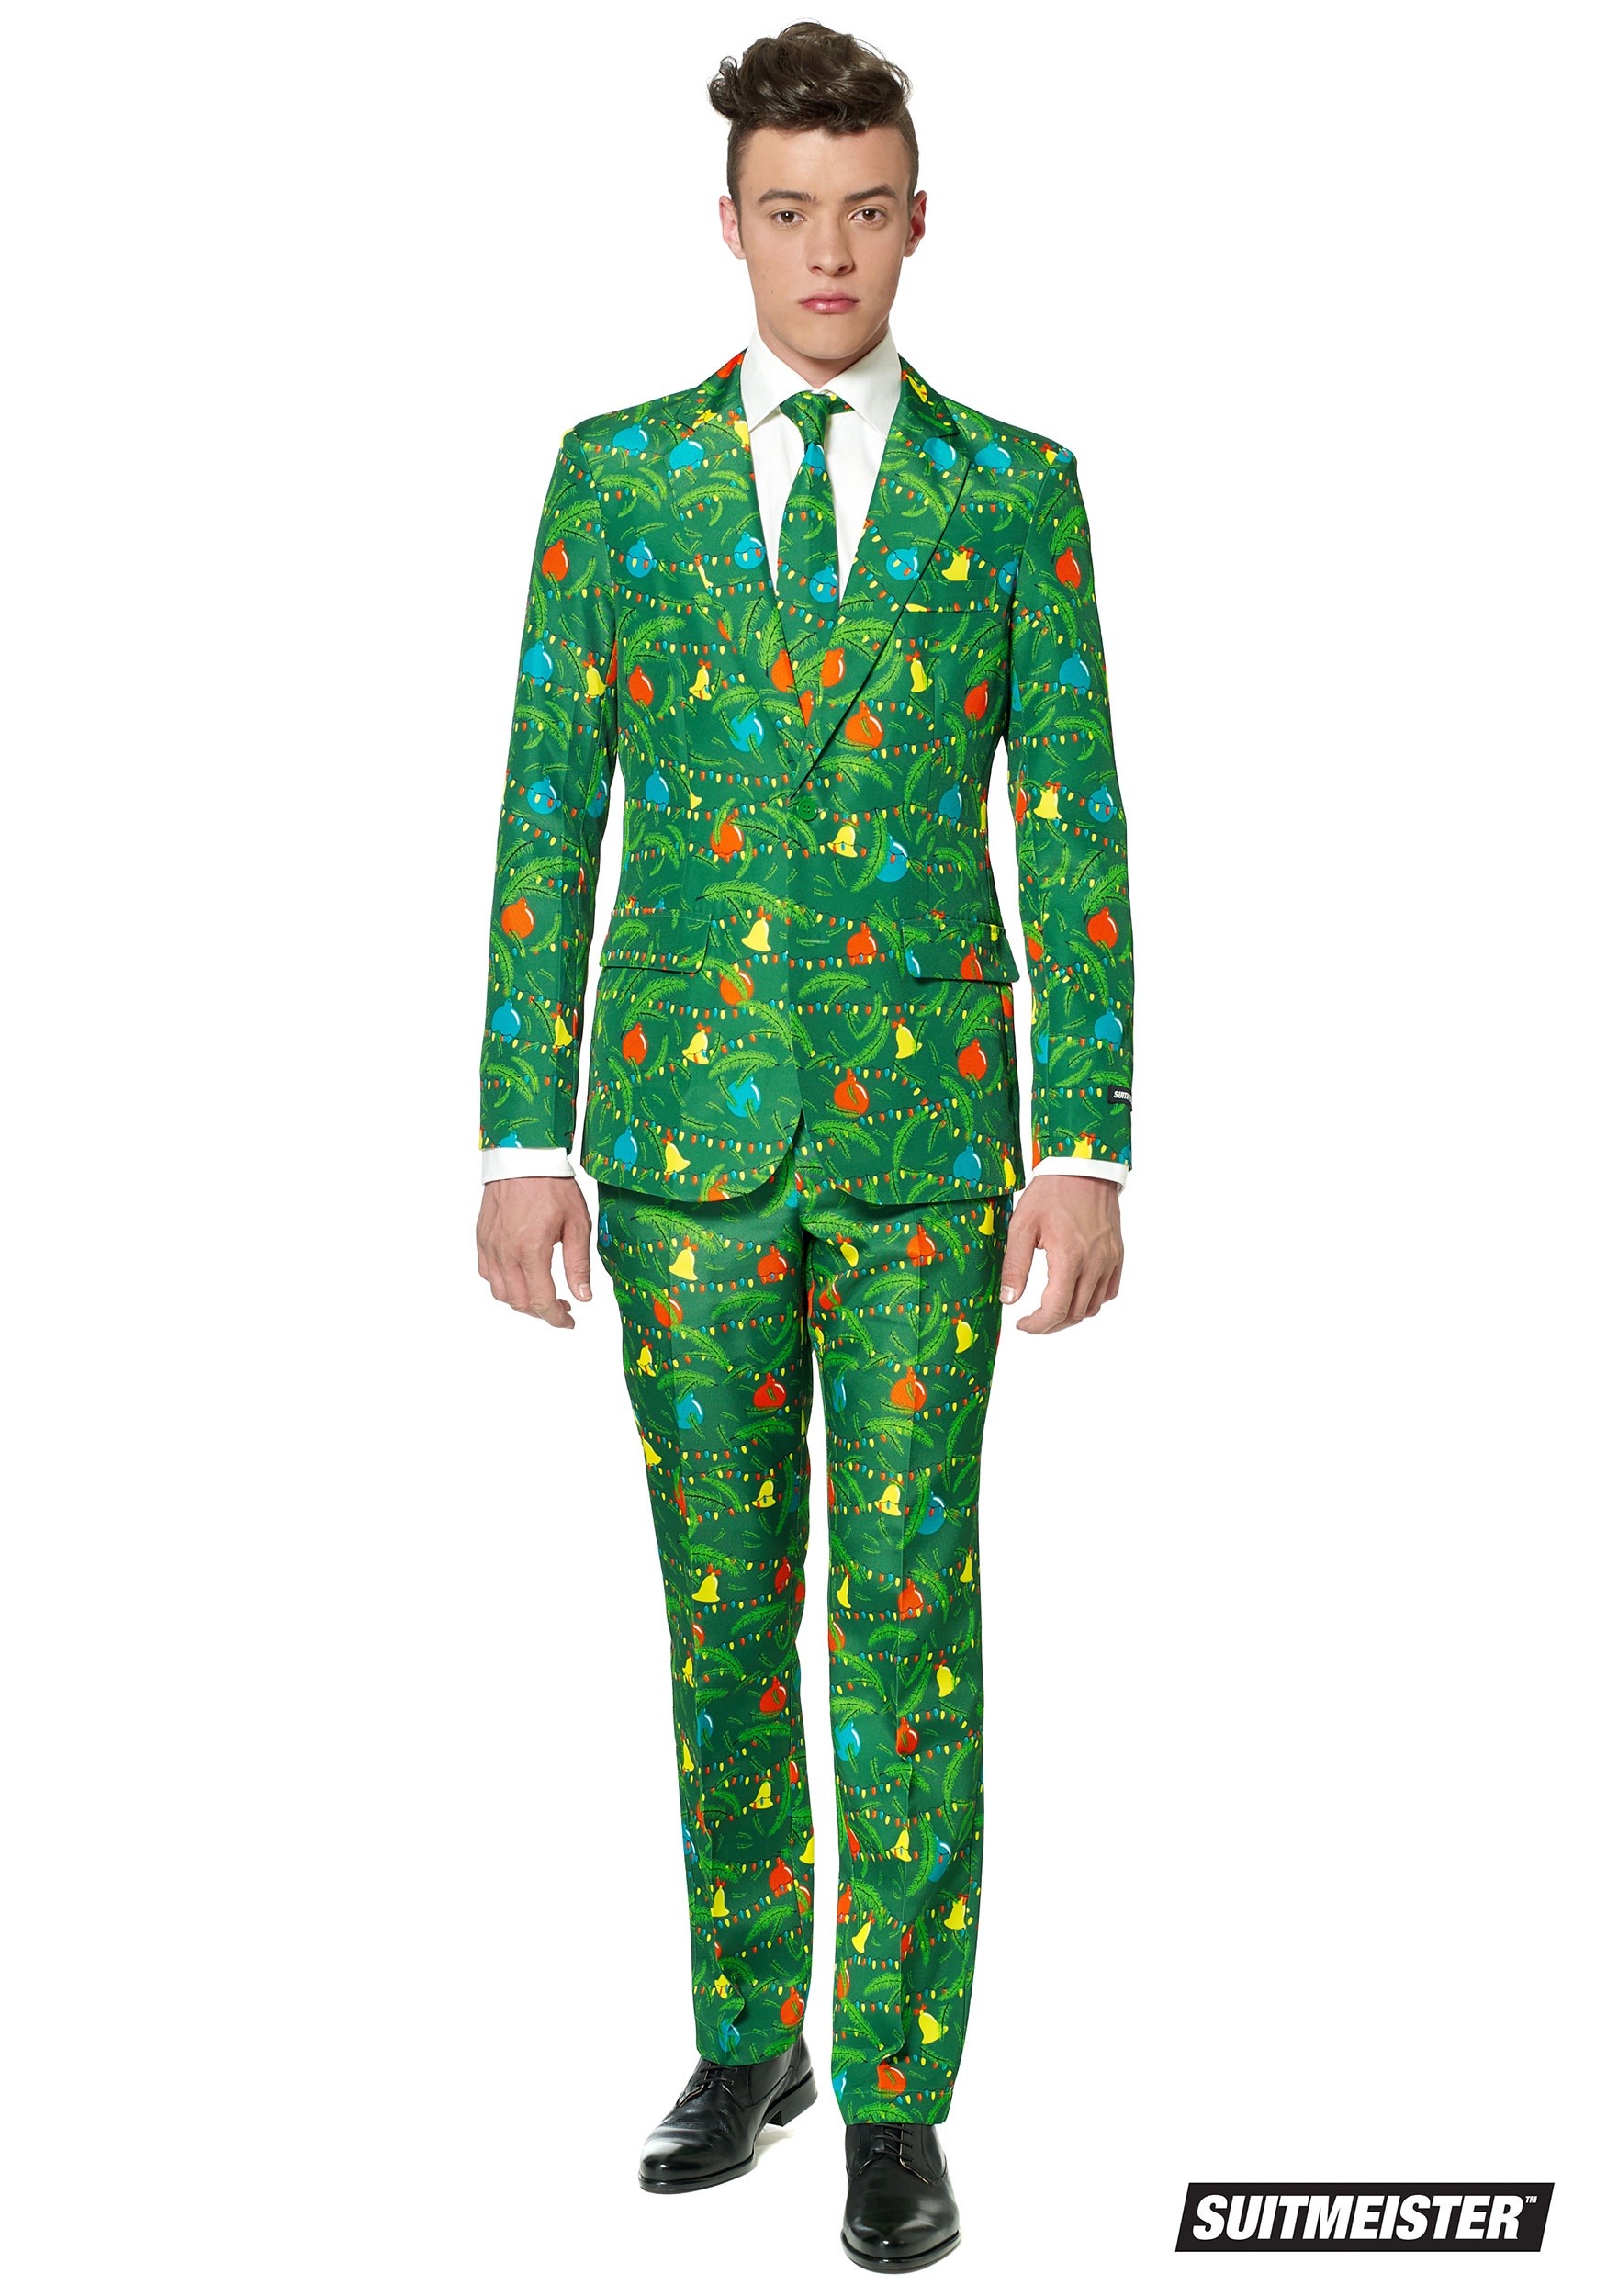 Green Christmas Tree Men’s Suitmeister Suit